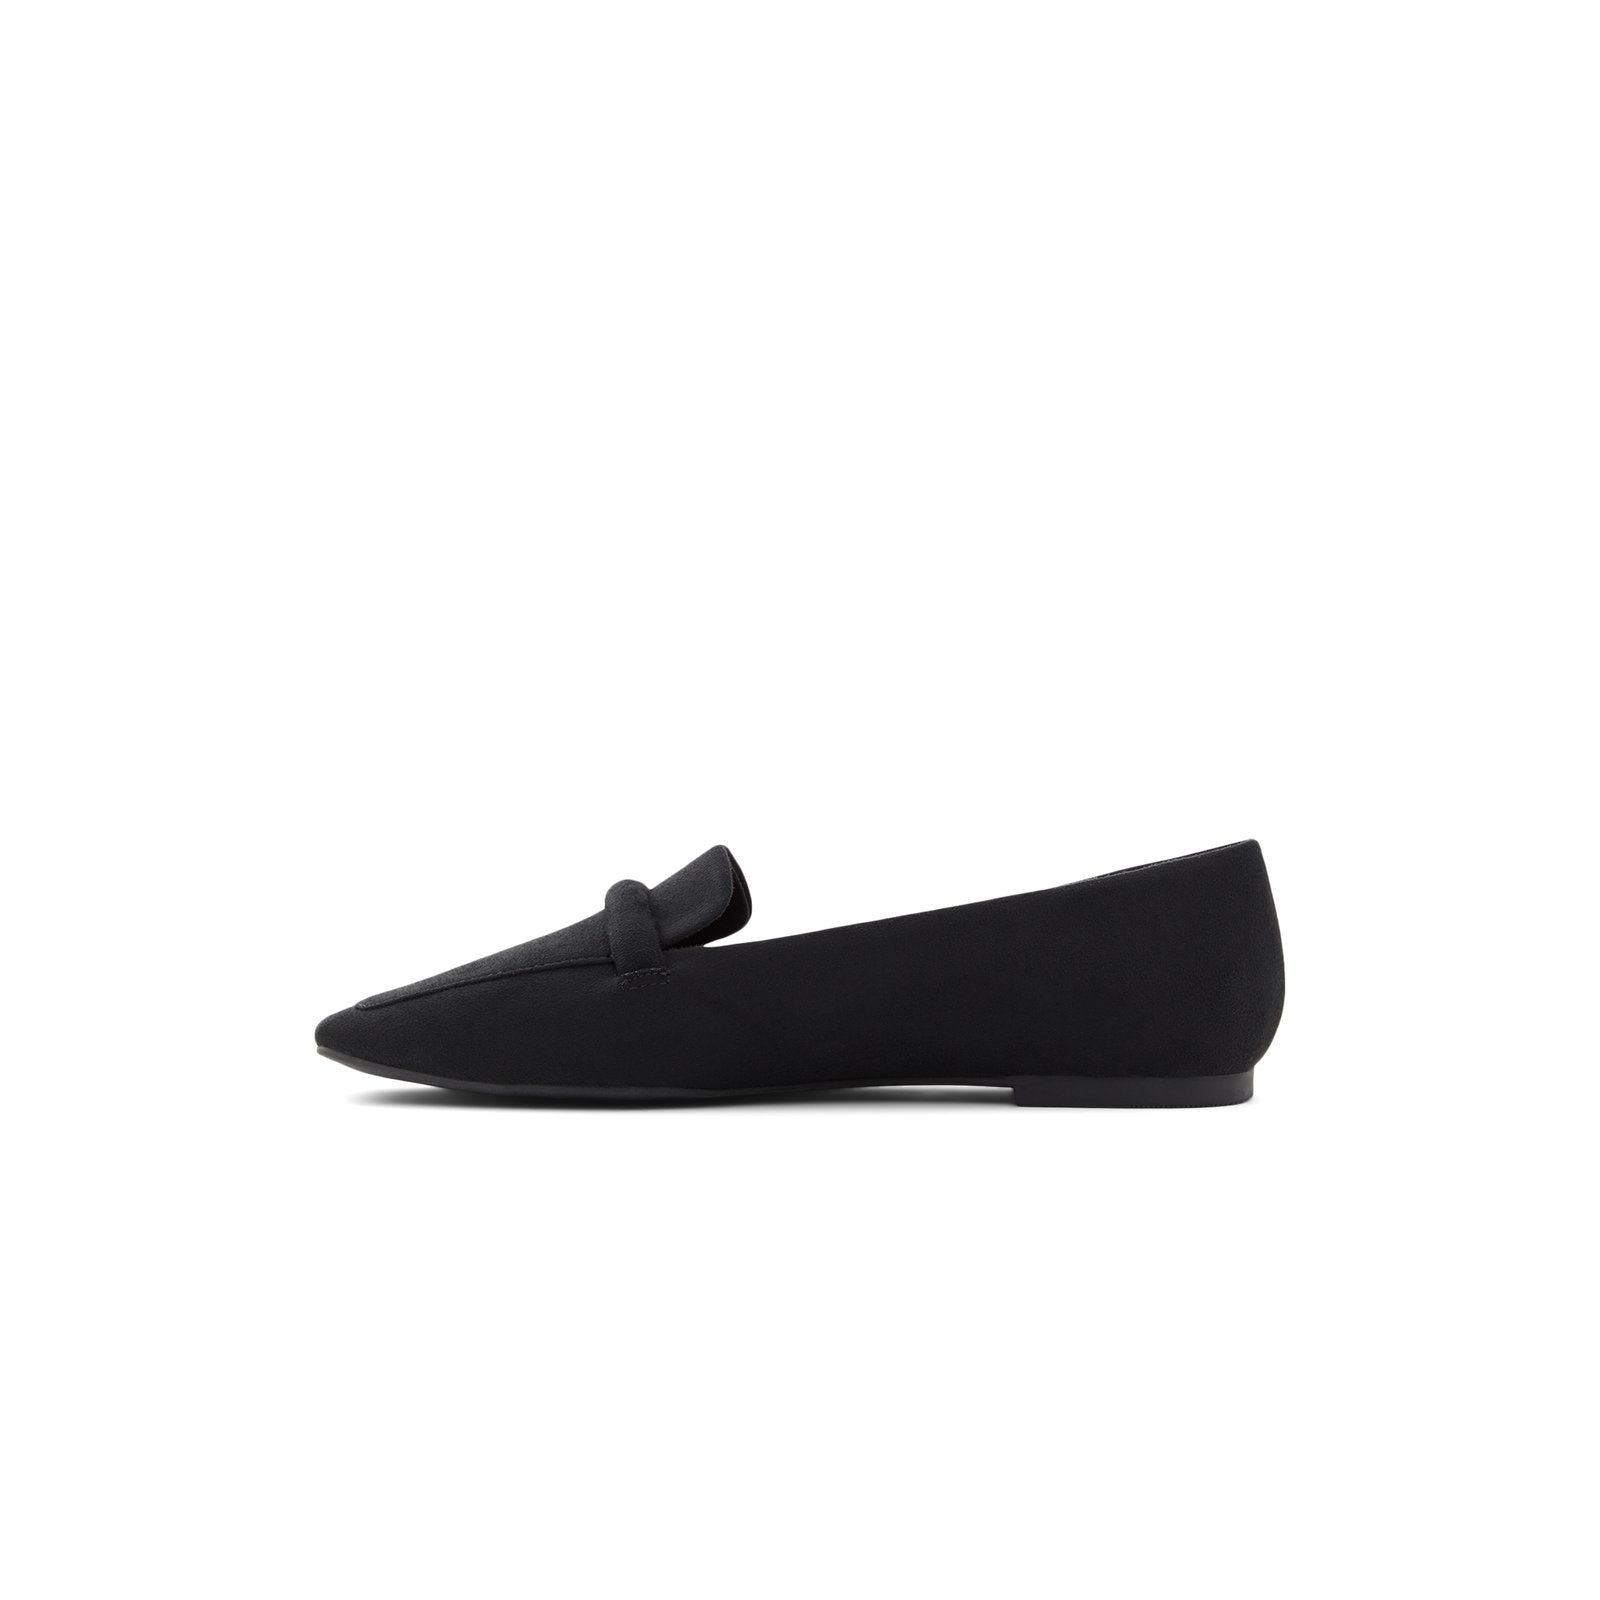 Ammaria / Shoes Women Shoes - Black - CALL IT SPRING KSA